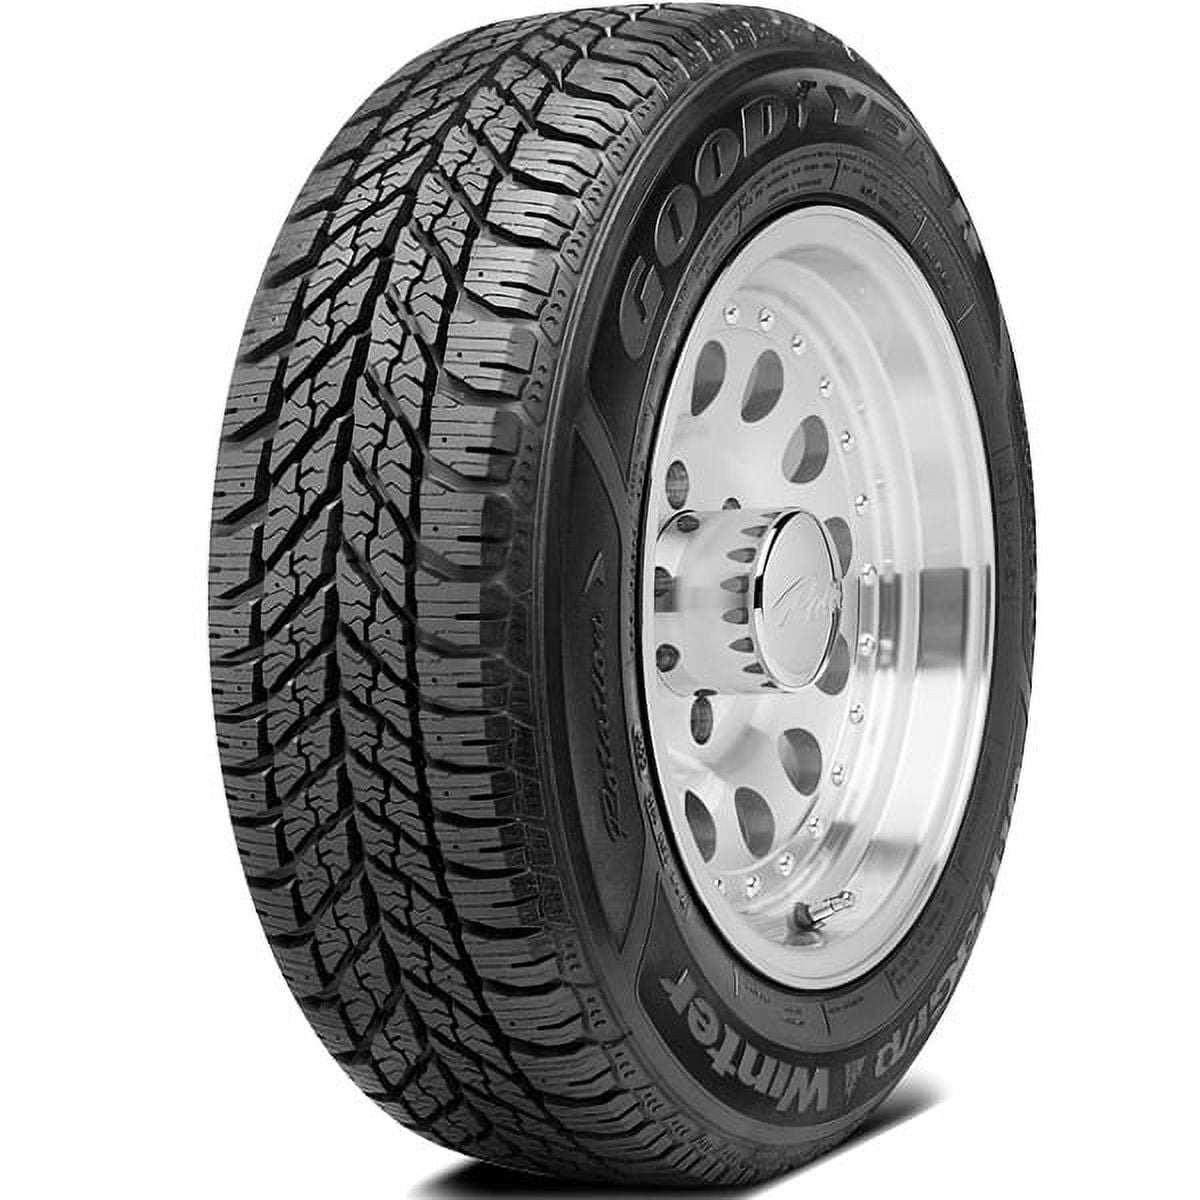 1 195/70R14 1957014 766736355 / 91T New Winter / 195/70/14 Grip Tires Ultra Goodyear